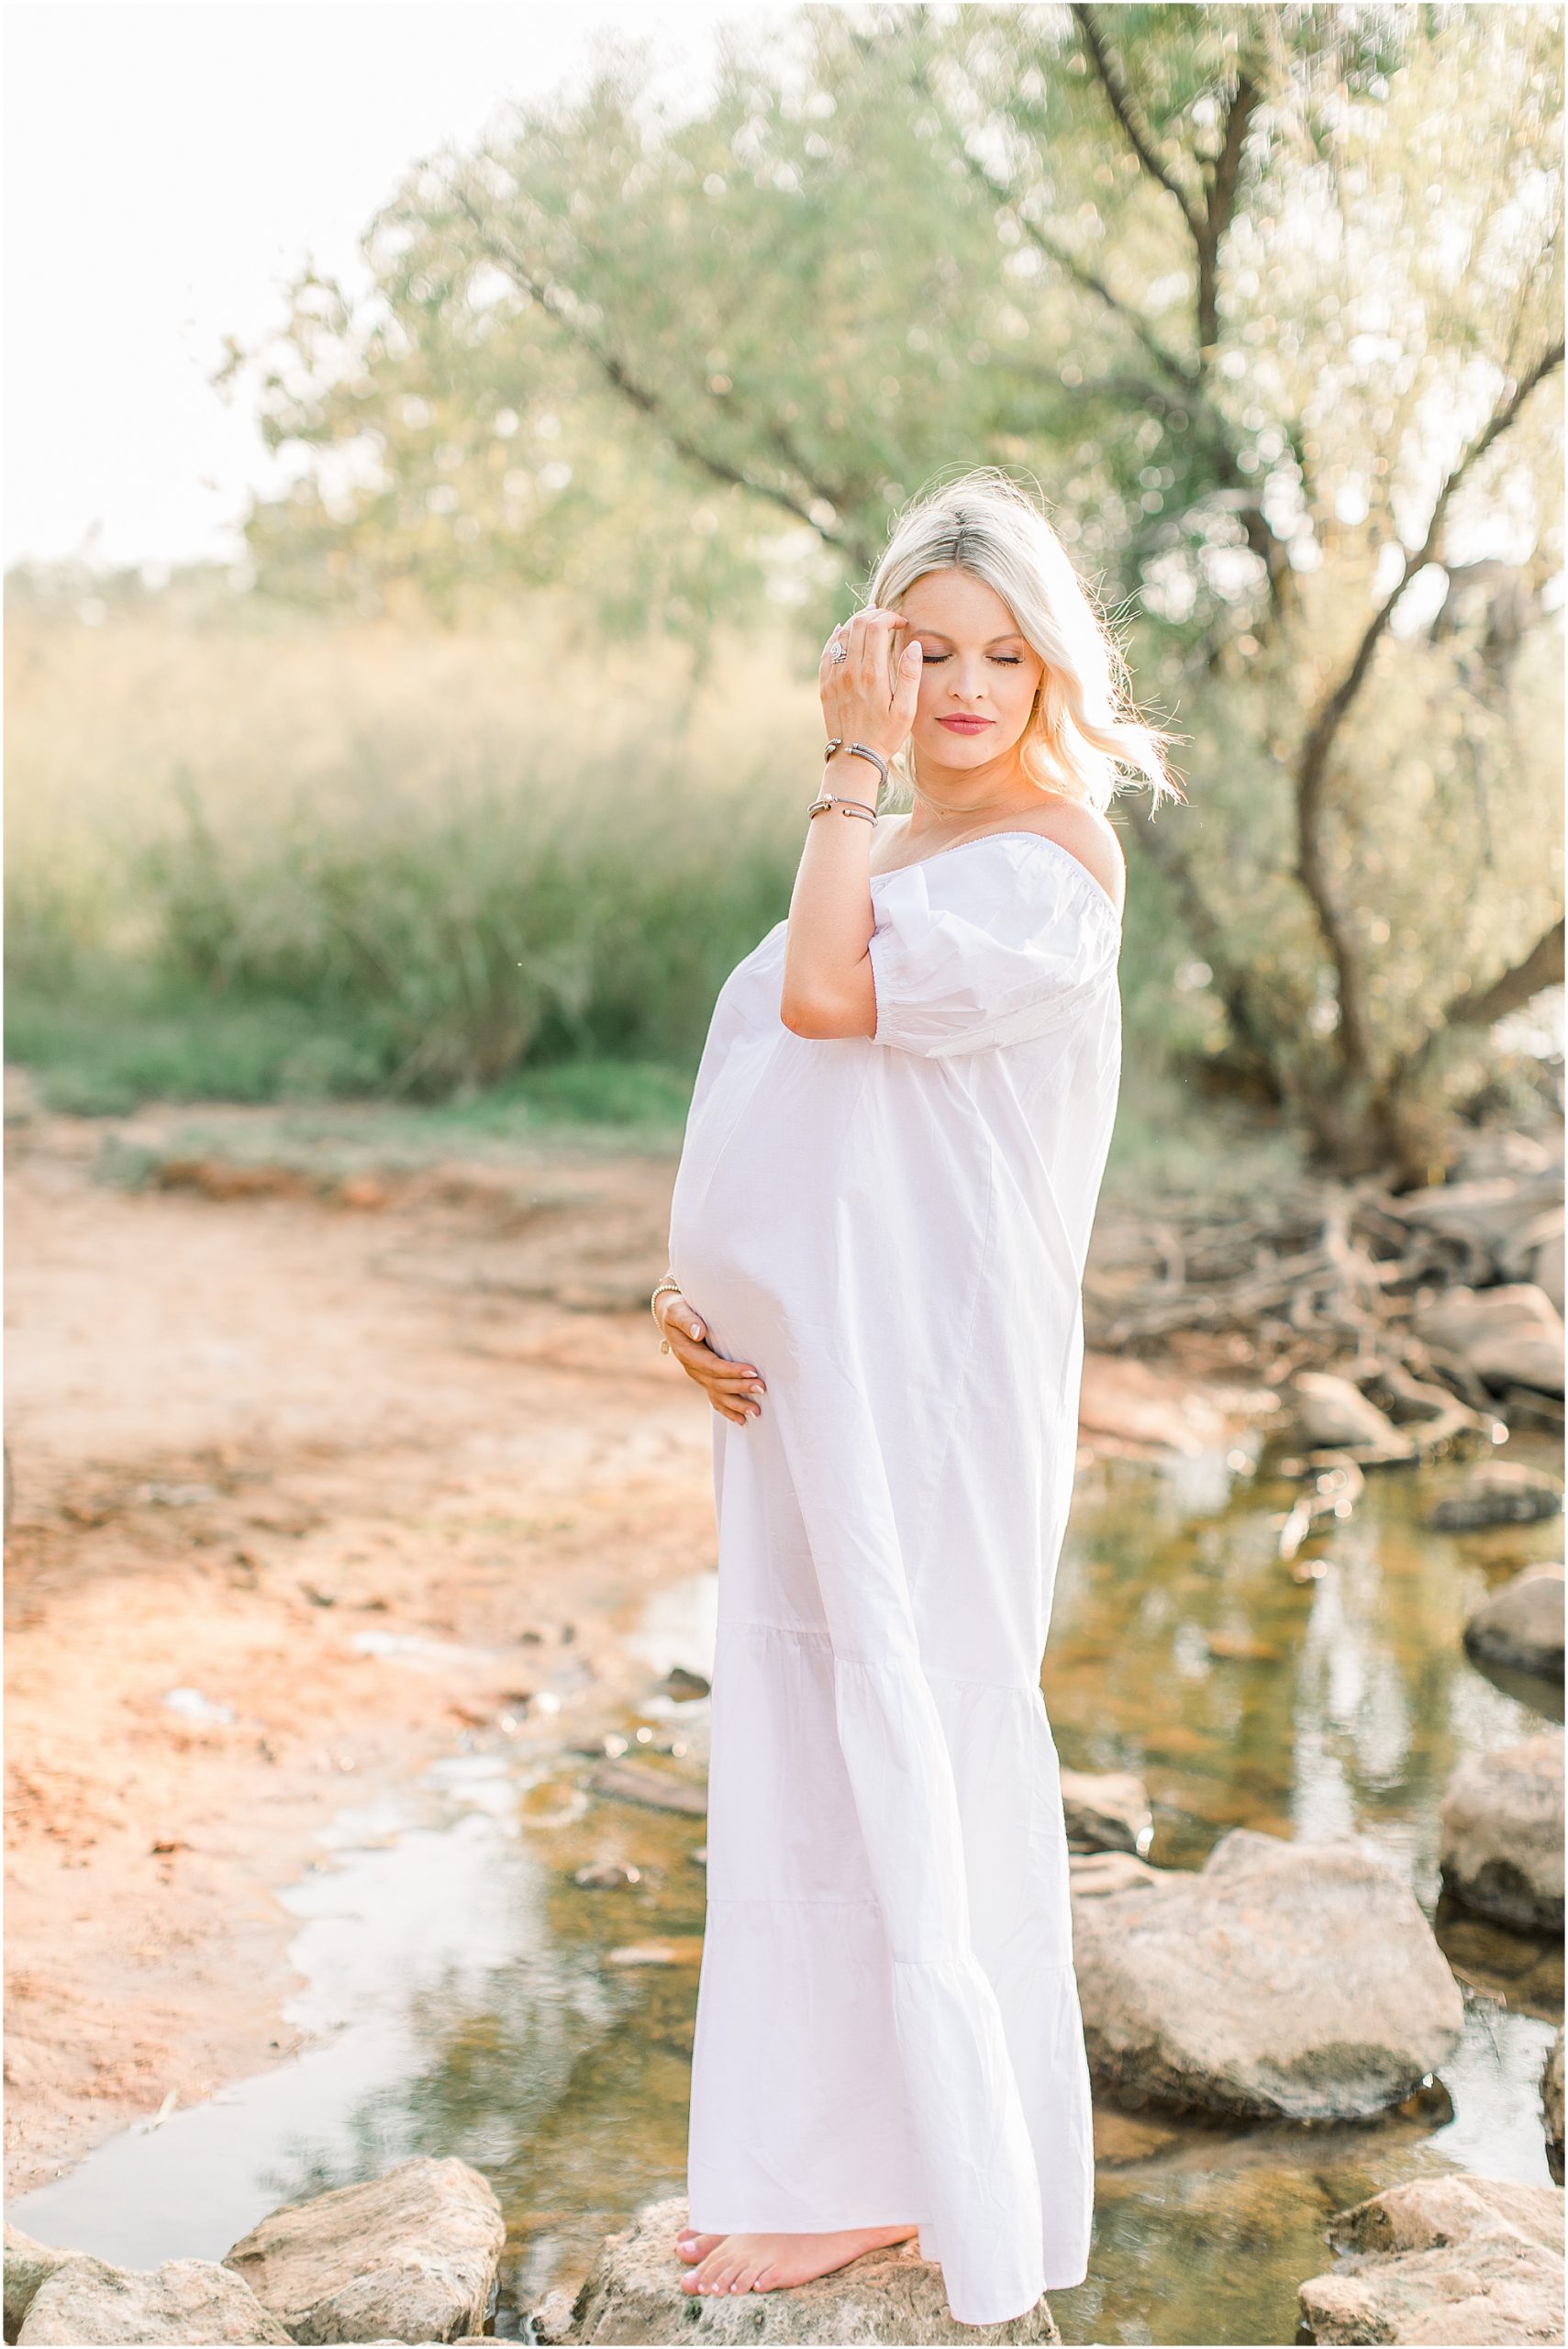 Best Oklahoma maternity photographer